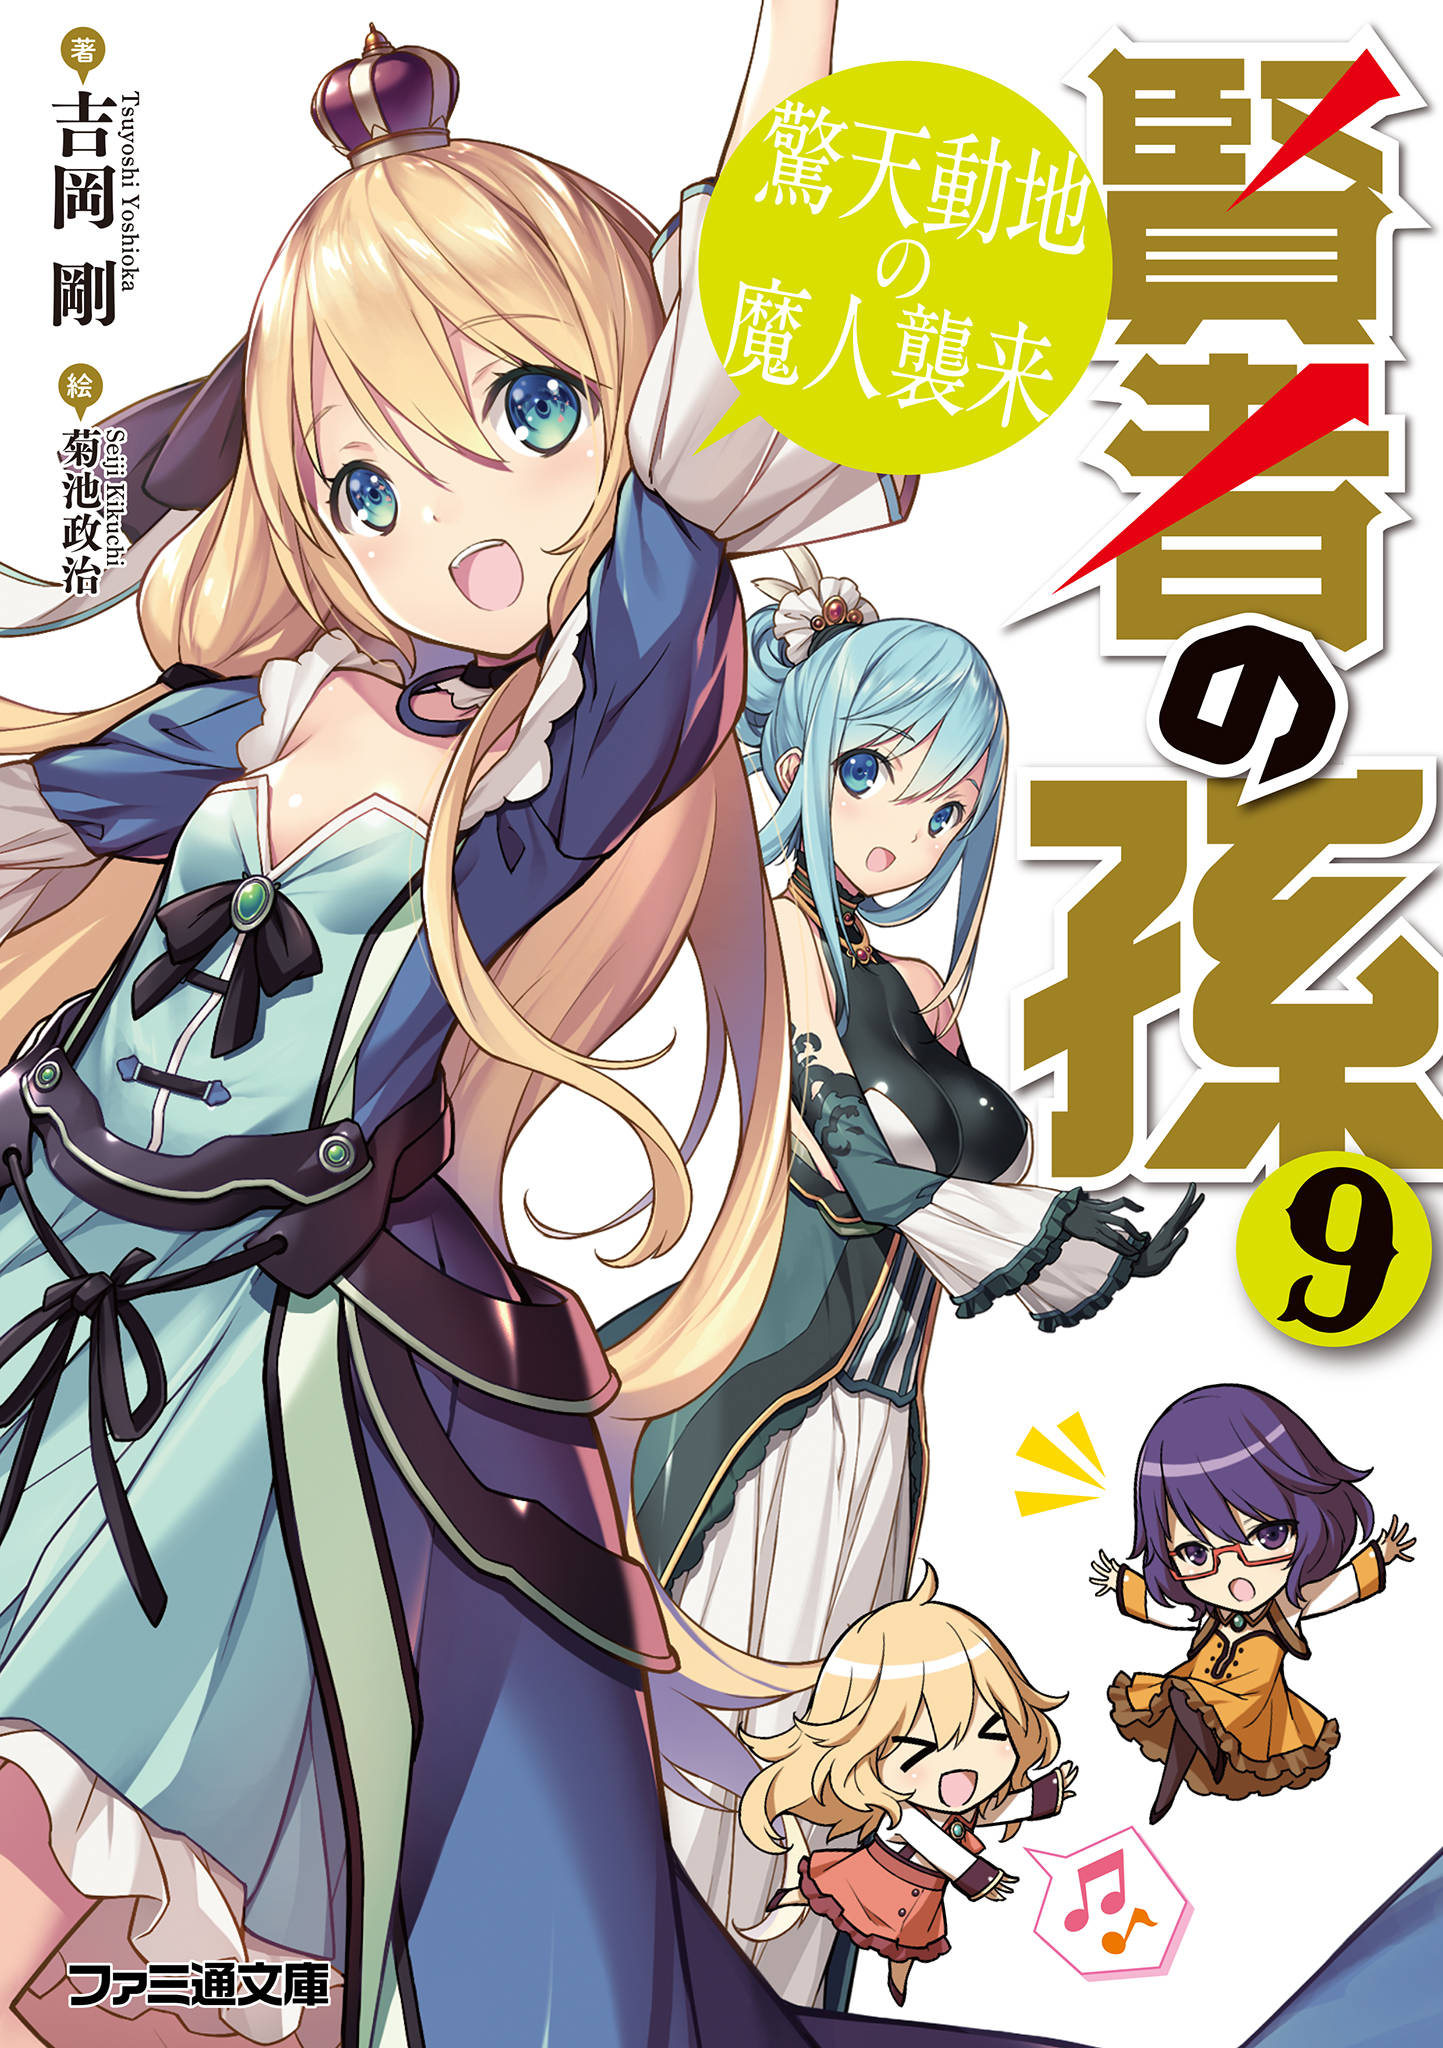 Light Novel Volume 9 Kenja no Mago Wiki |